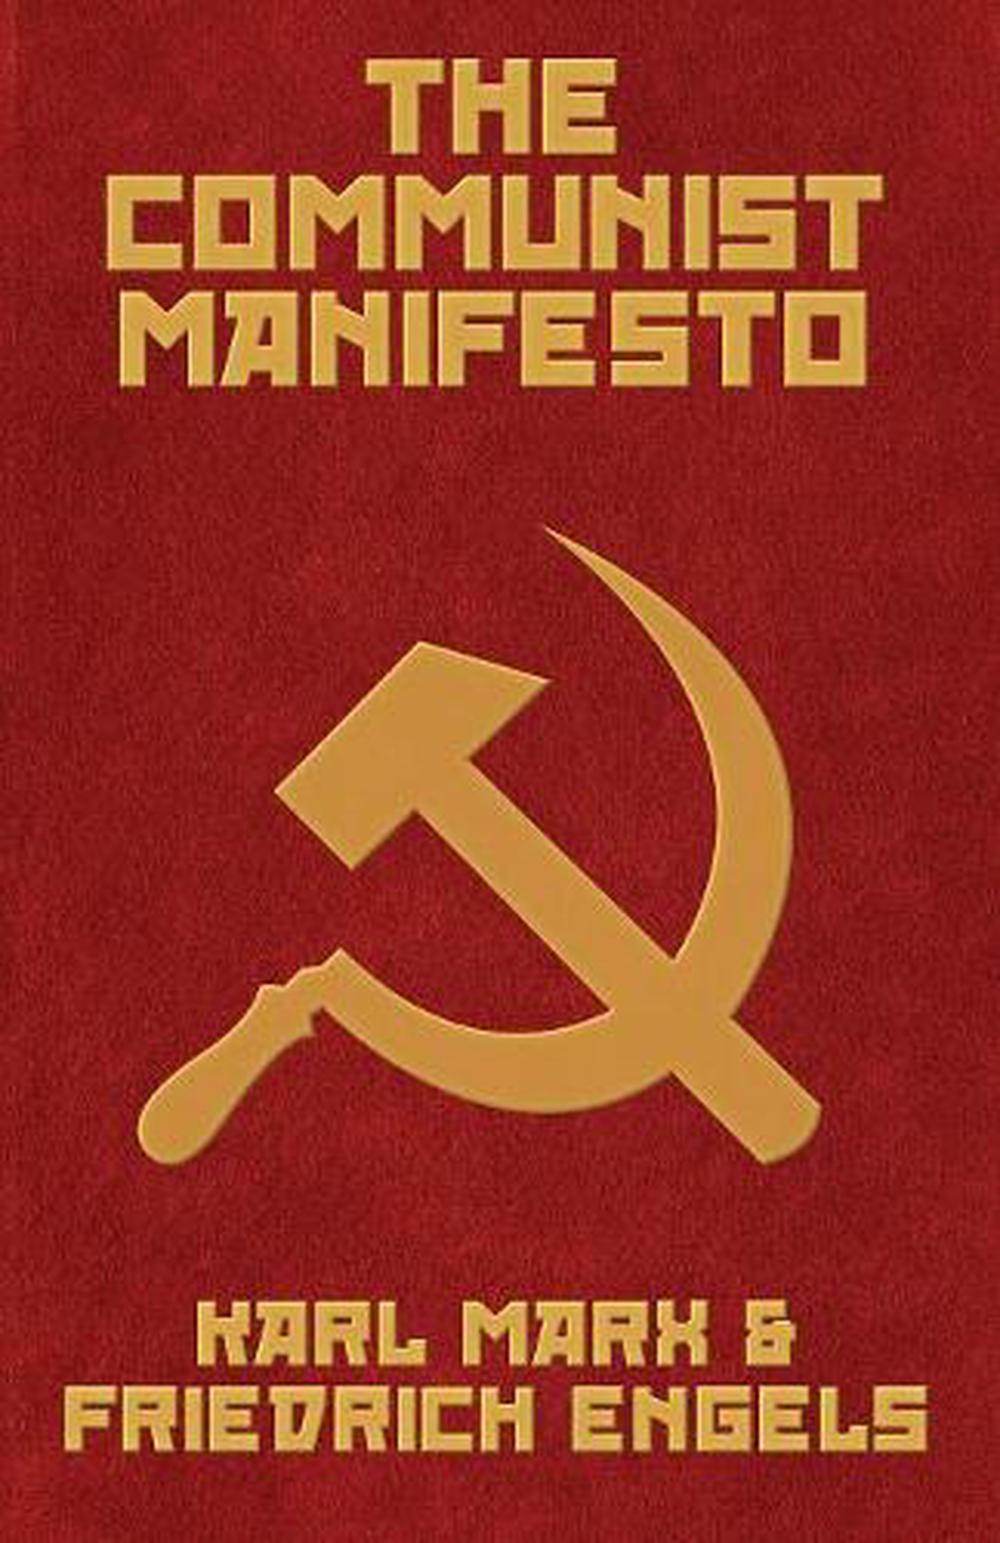 Karl marx the communist manifesto pdf download javascript app download for pc